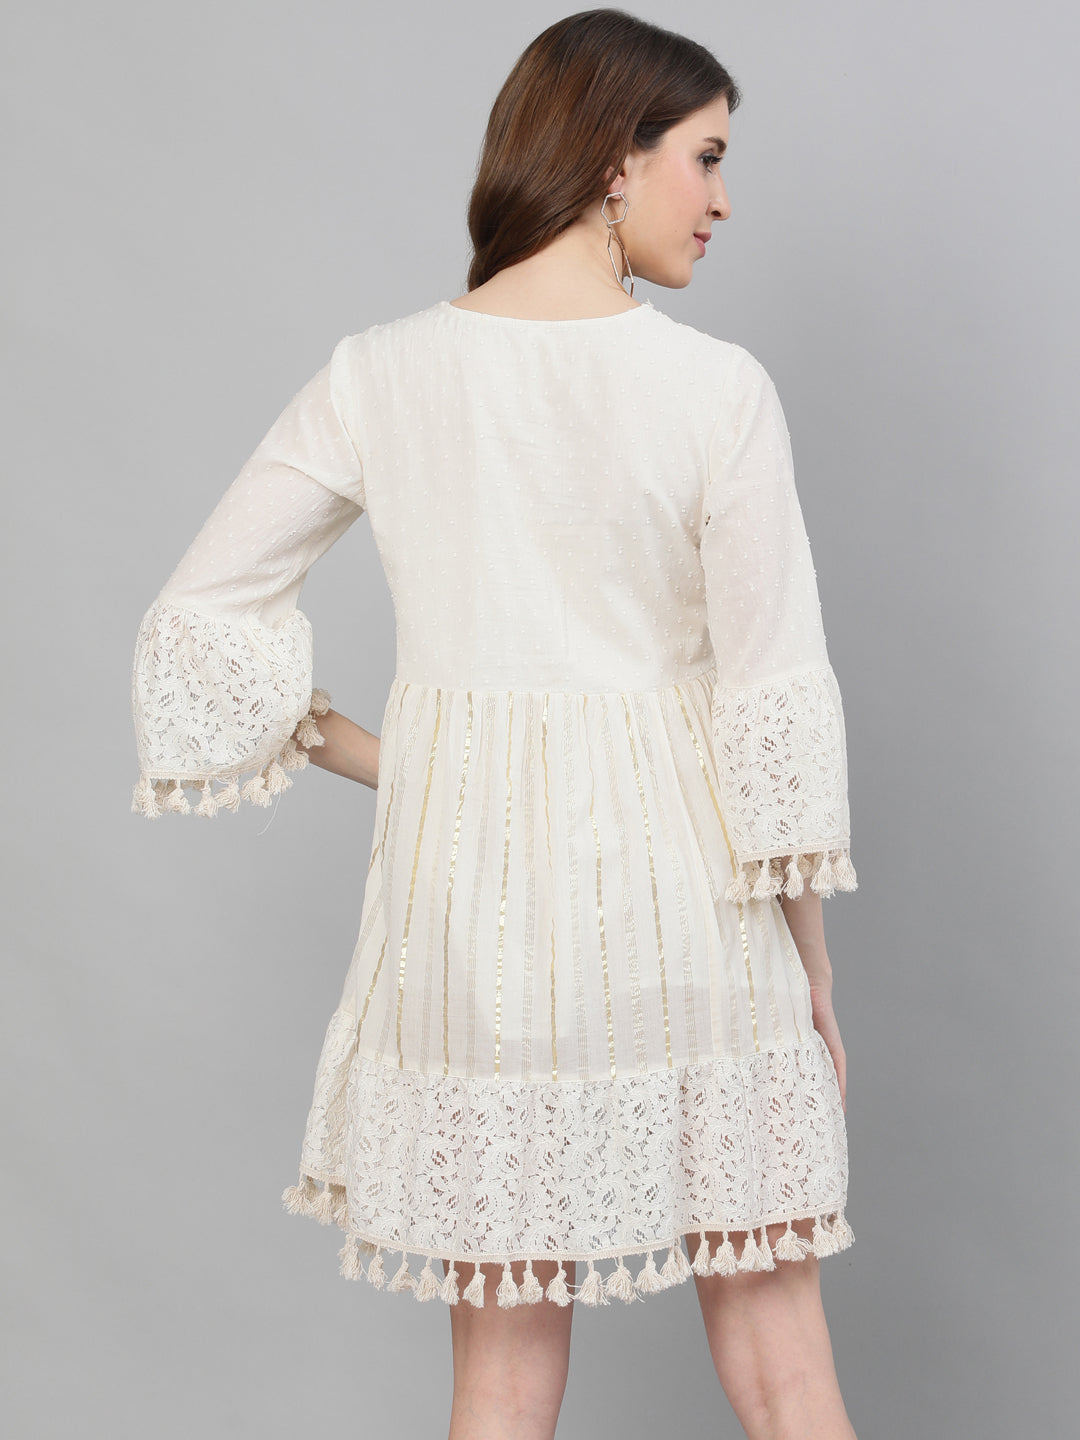 Ishin Women's Cotton Off White Lurex Embellished A-Line Dress